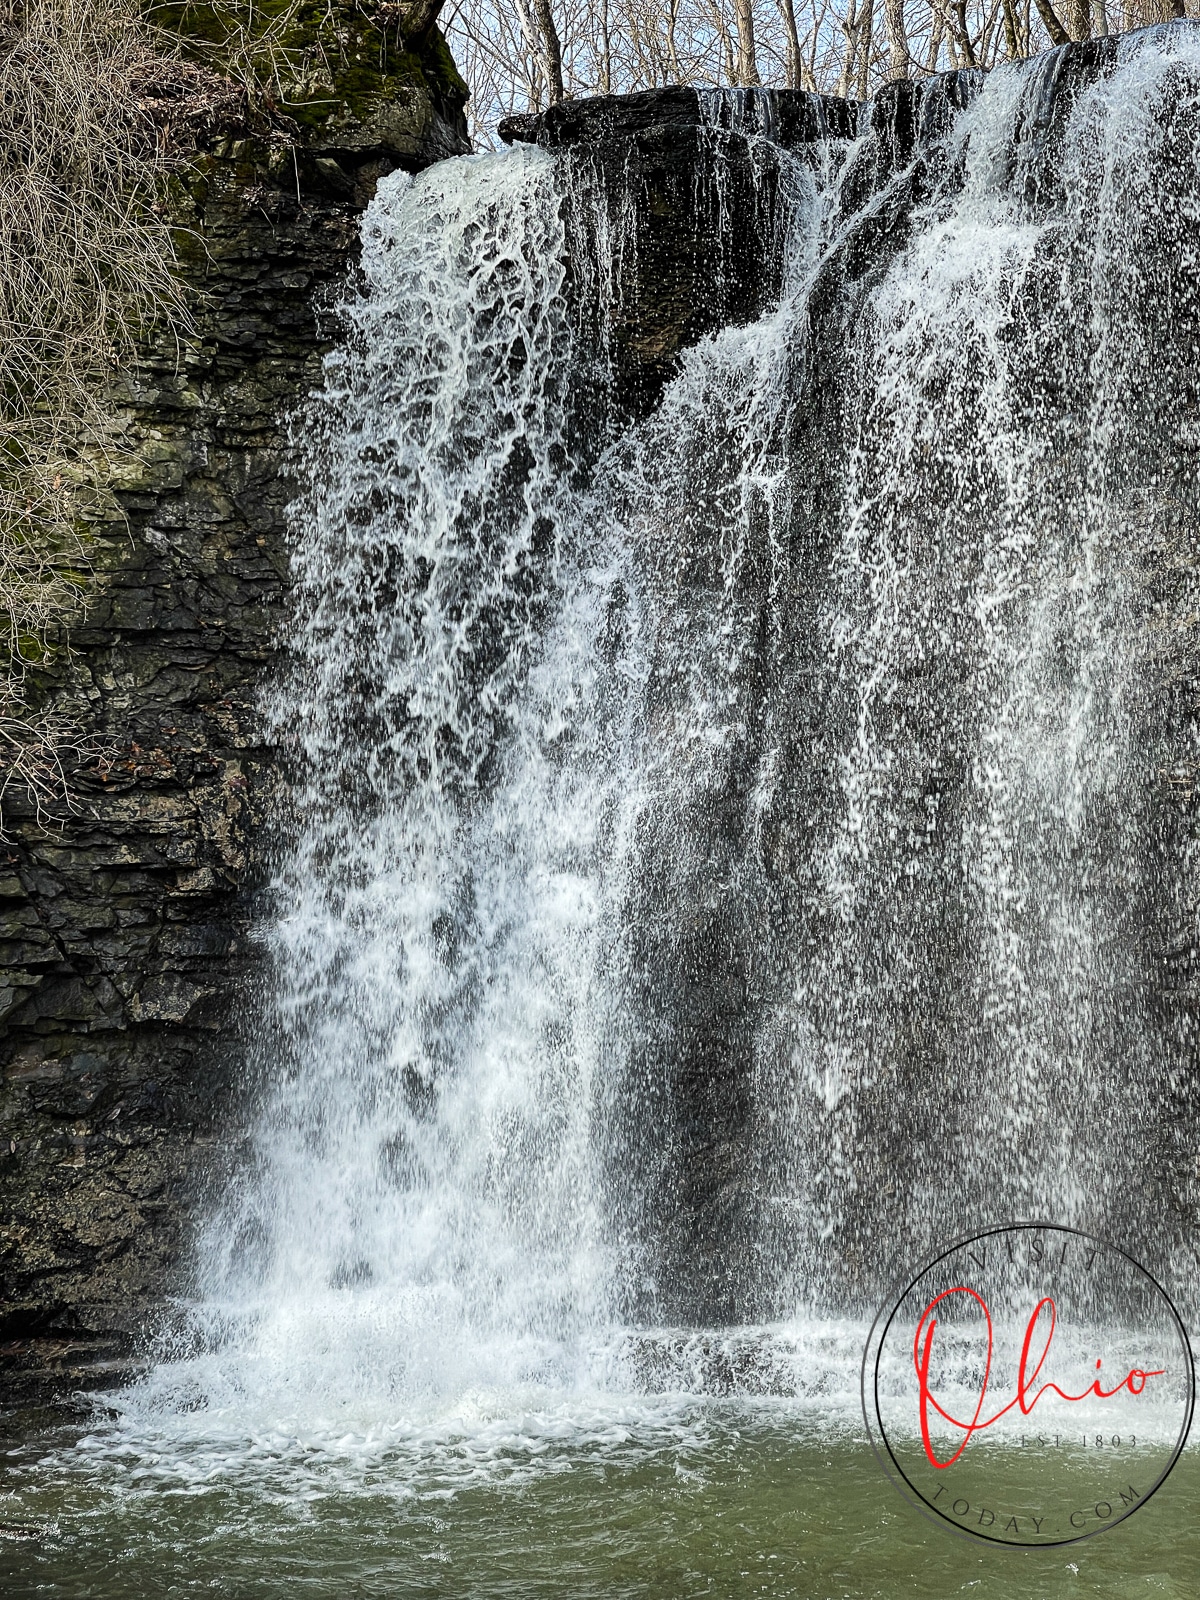 water falls down on a rock, a big waterfall